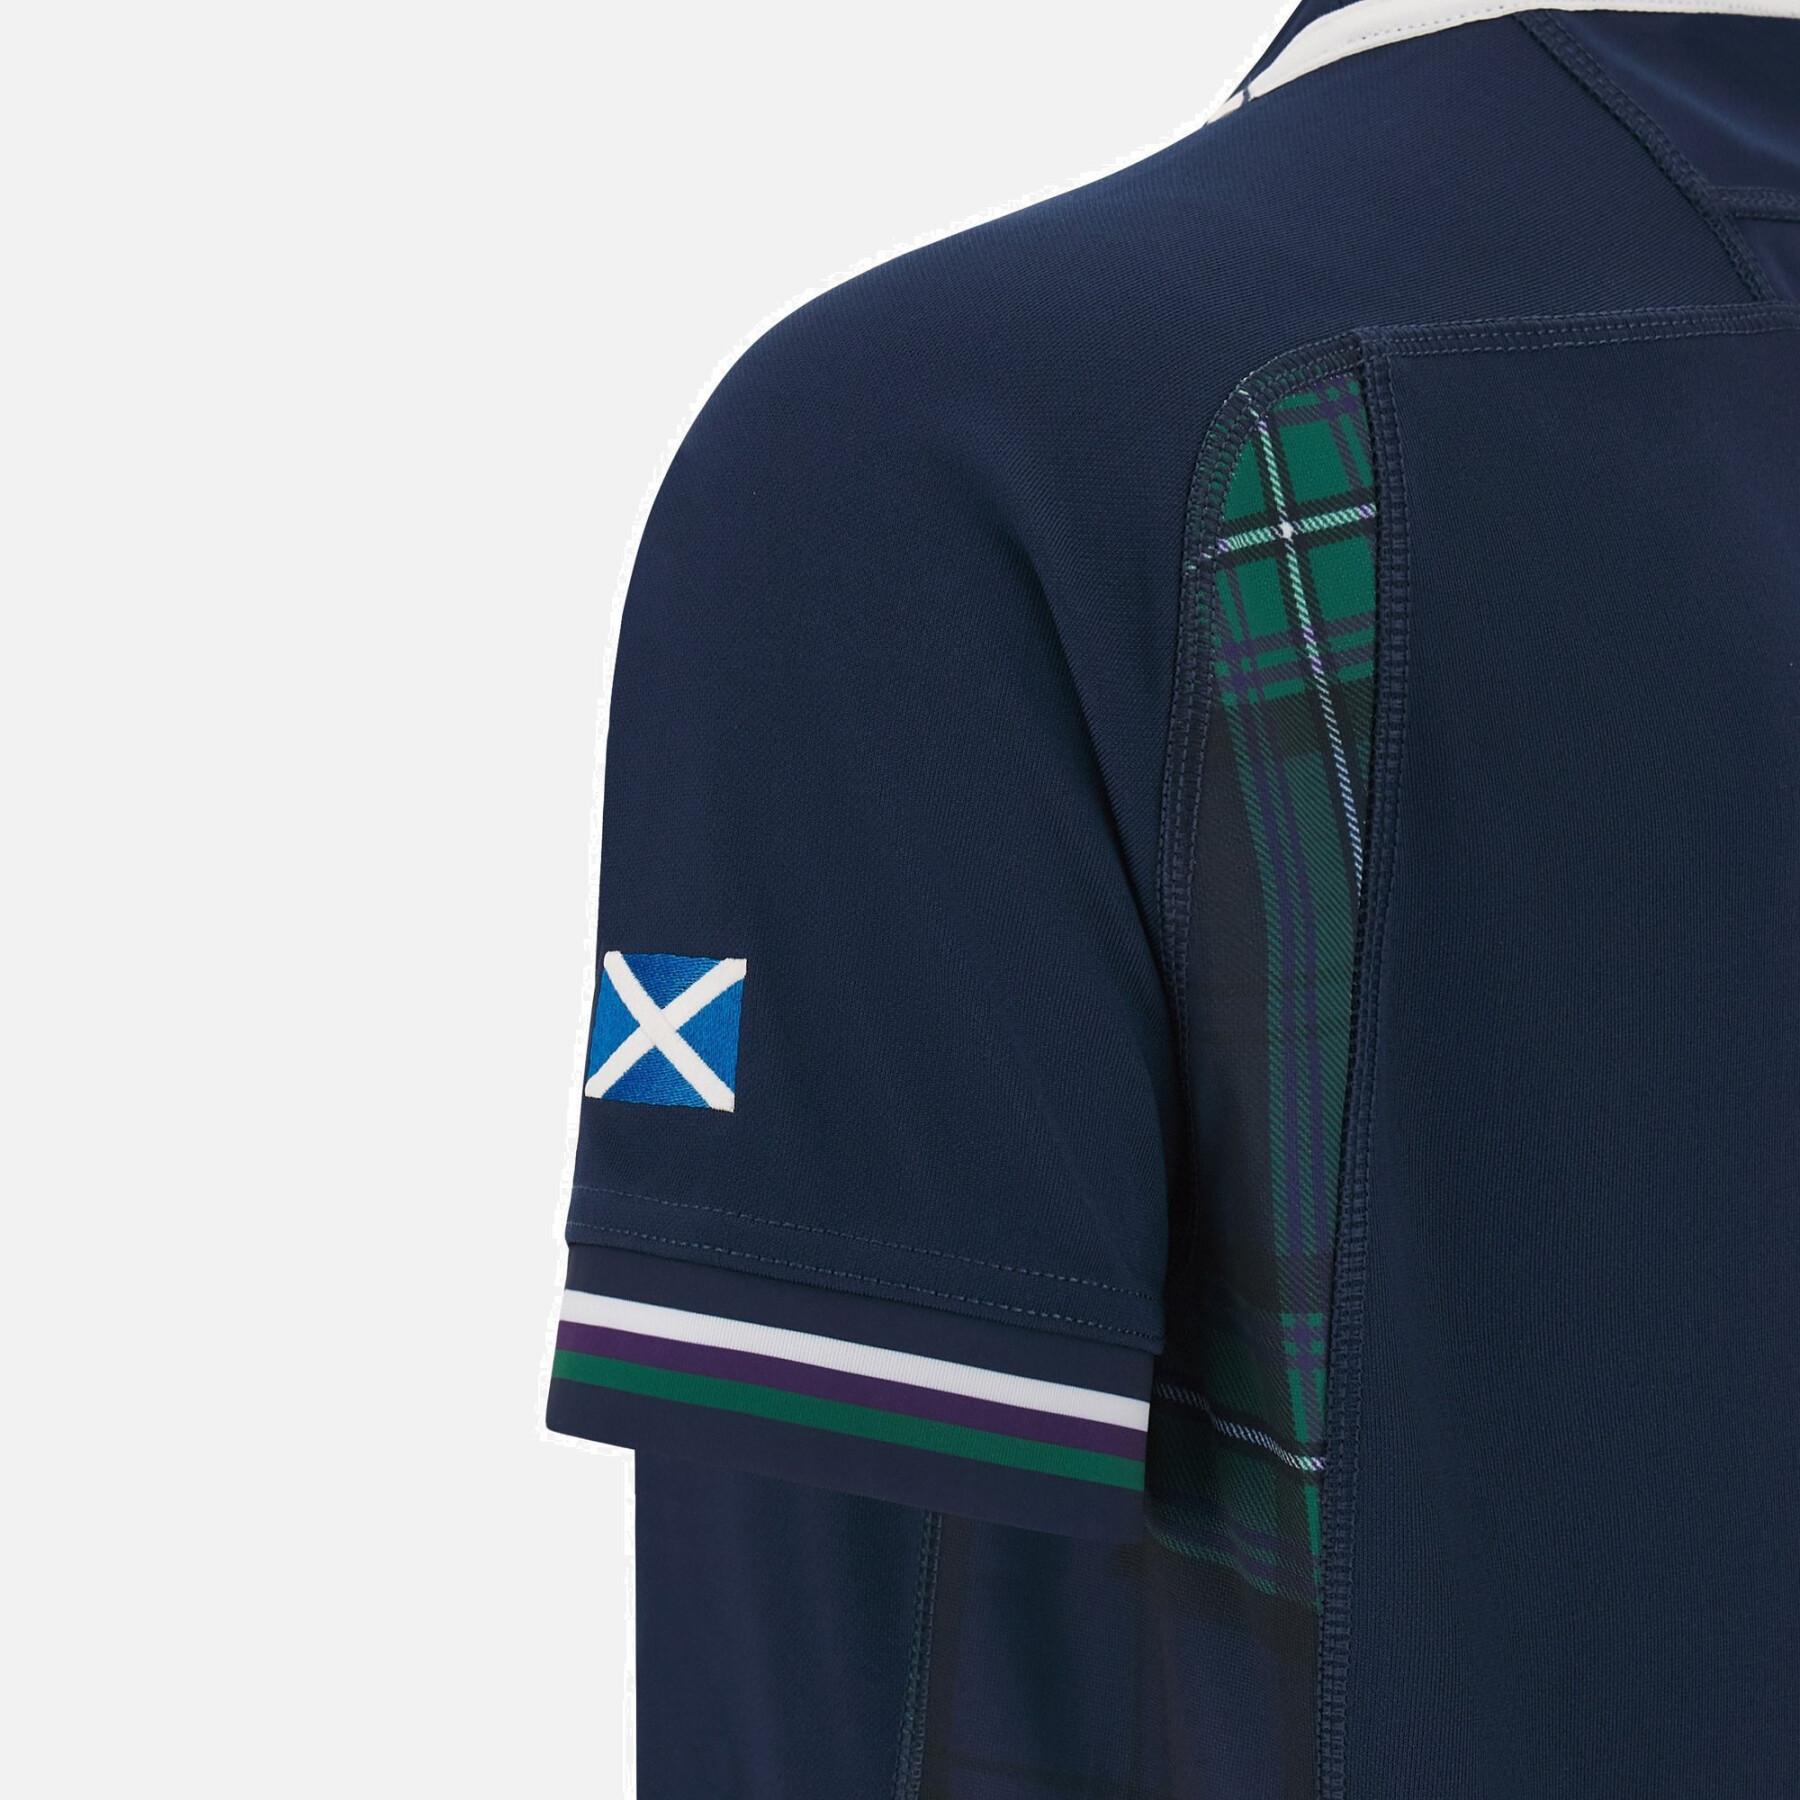 Women's home jersey Scotland RWC 2023